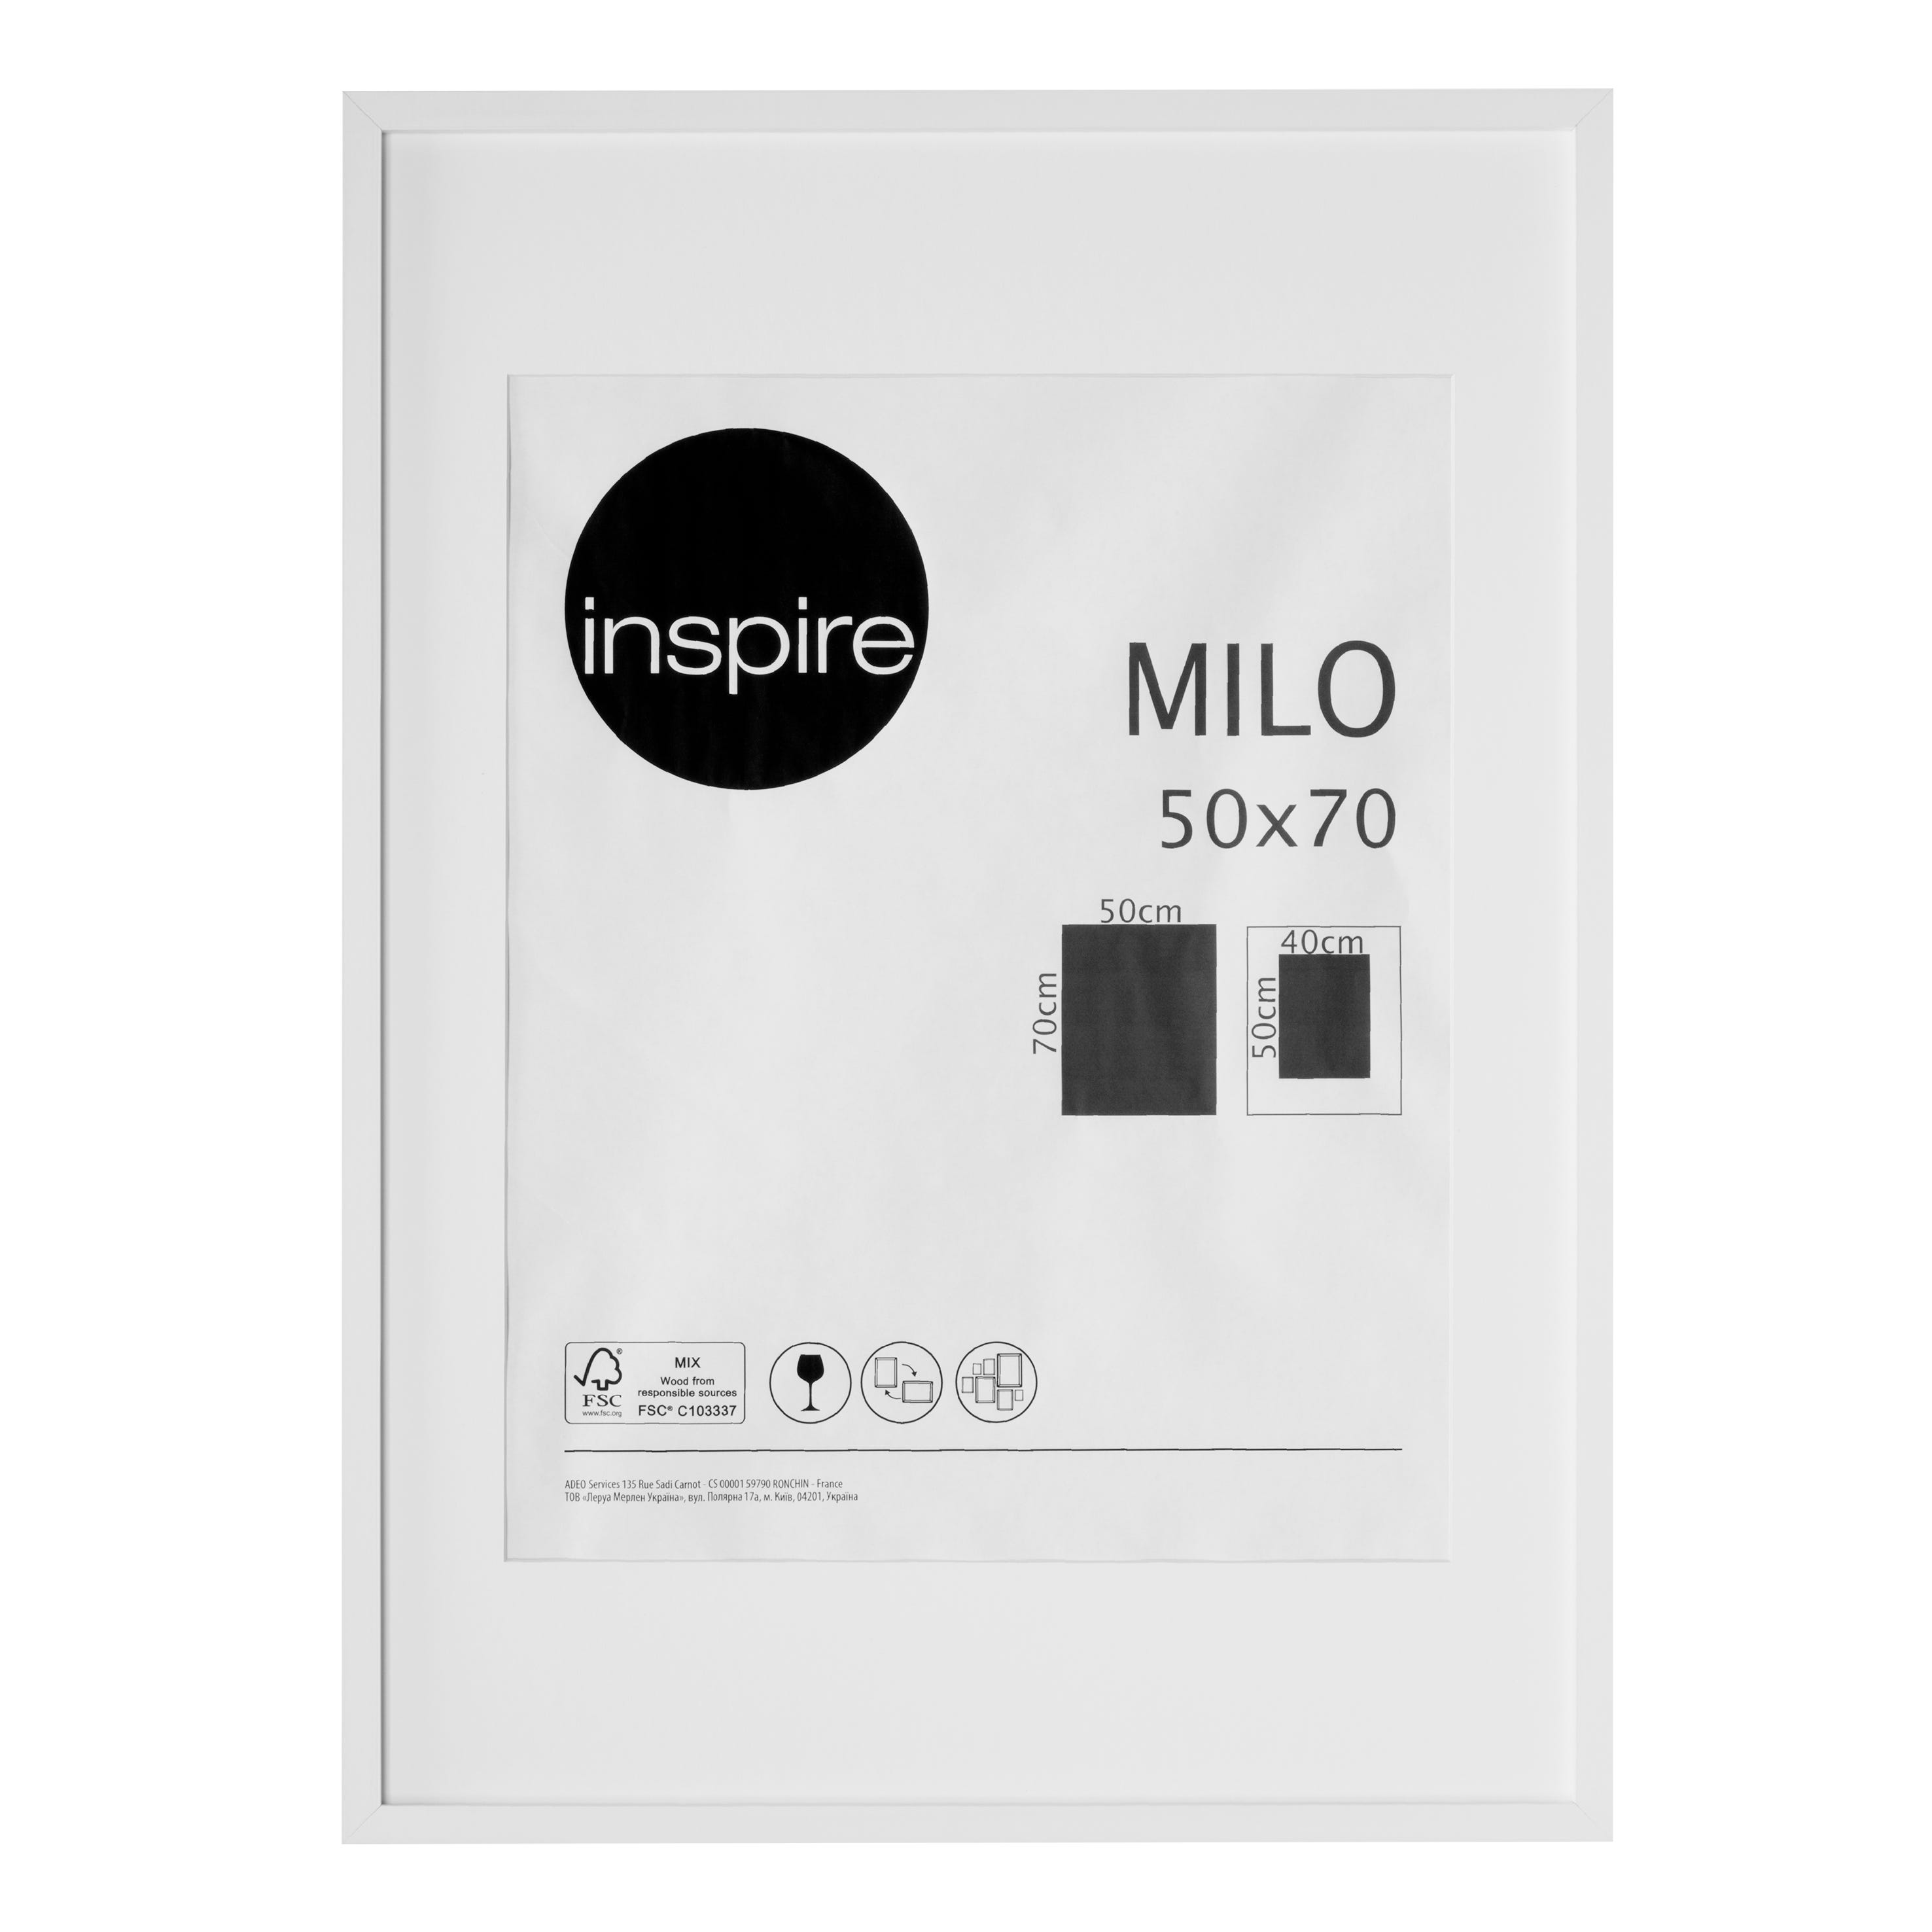 Marco con passe partout INSPIRE Milo roble 50 x 70cm